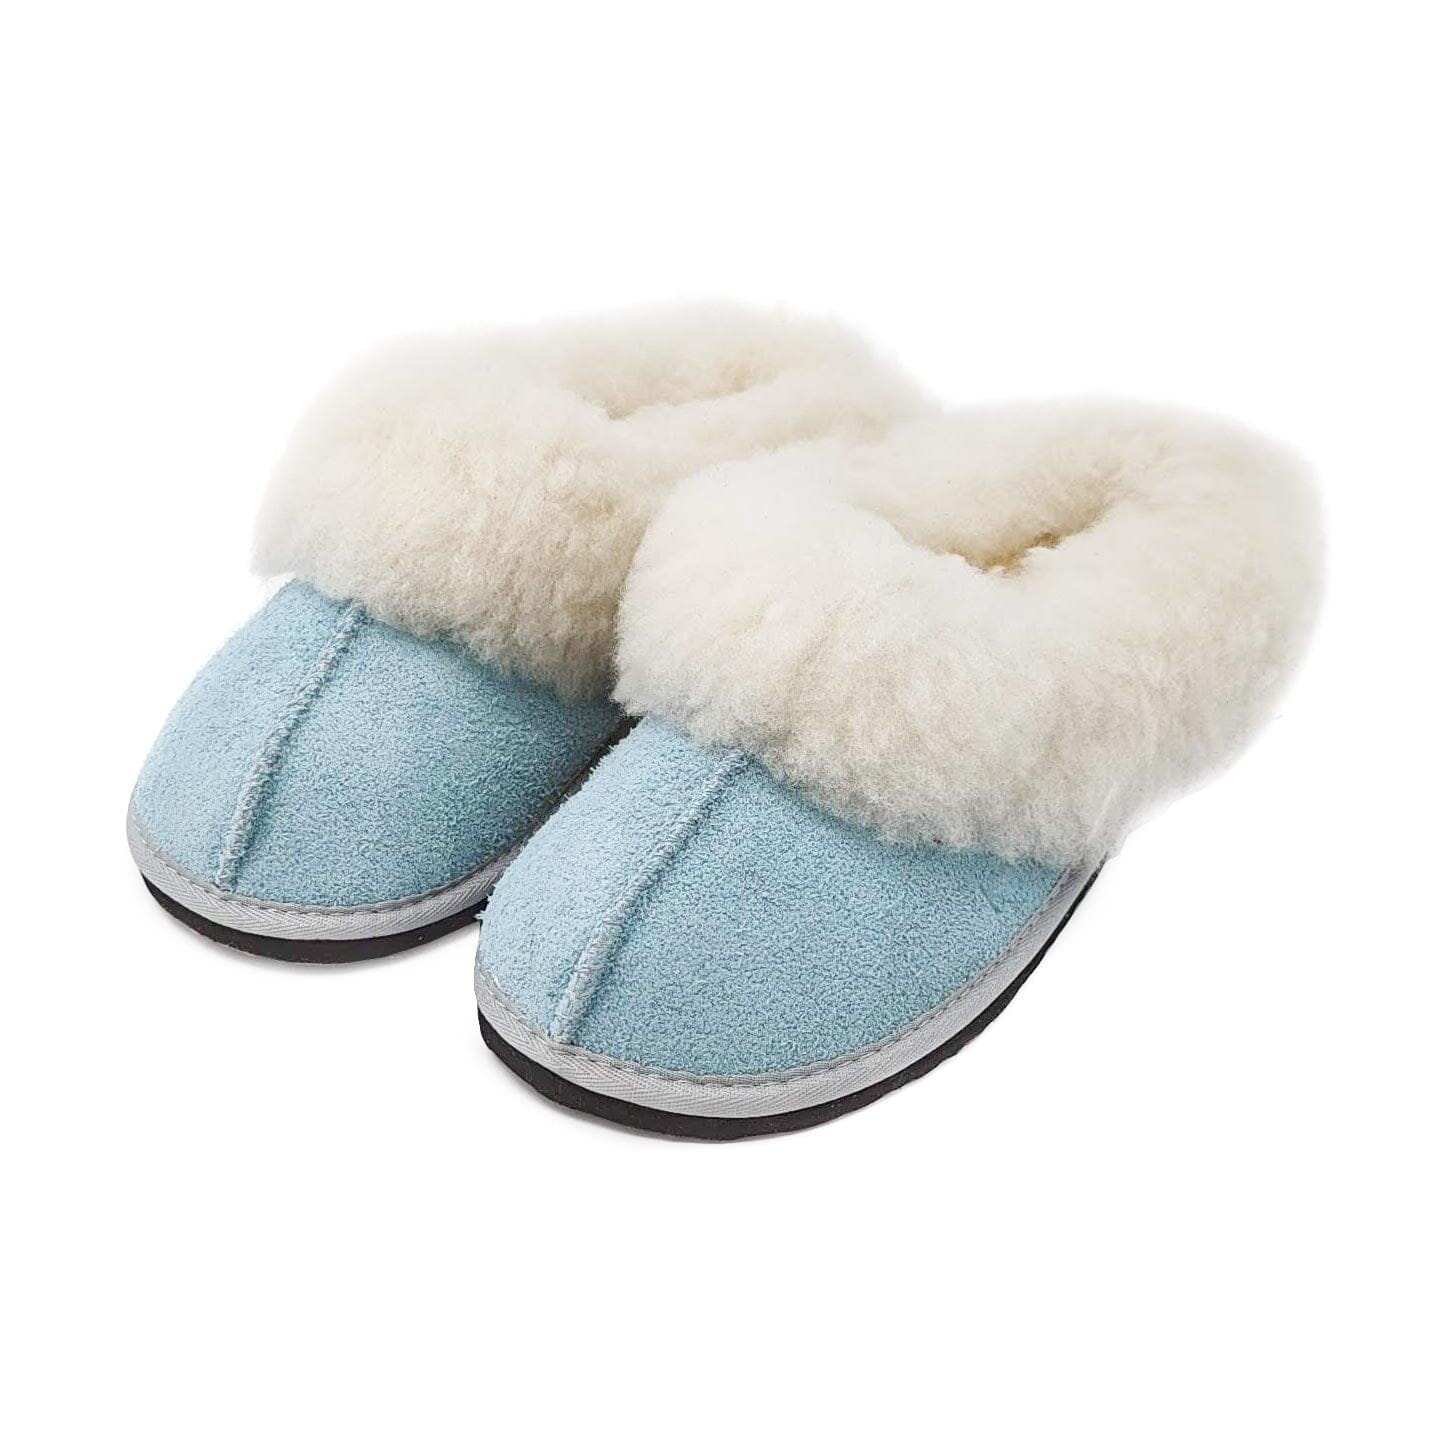 Karu Sleek Limited-Edition Powder Blue Sheepskin & Wool Slippers Slippers Karu Slippers 3 